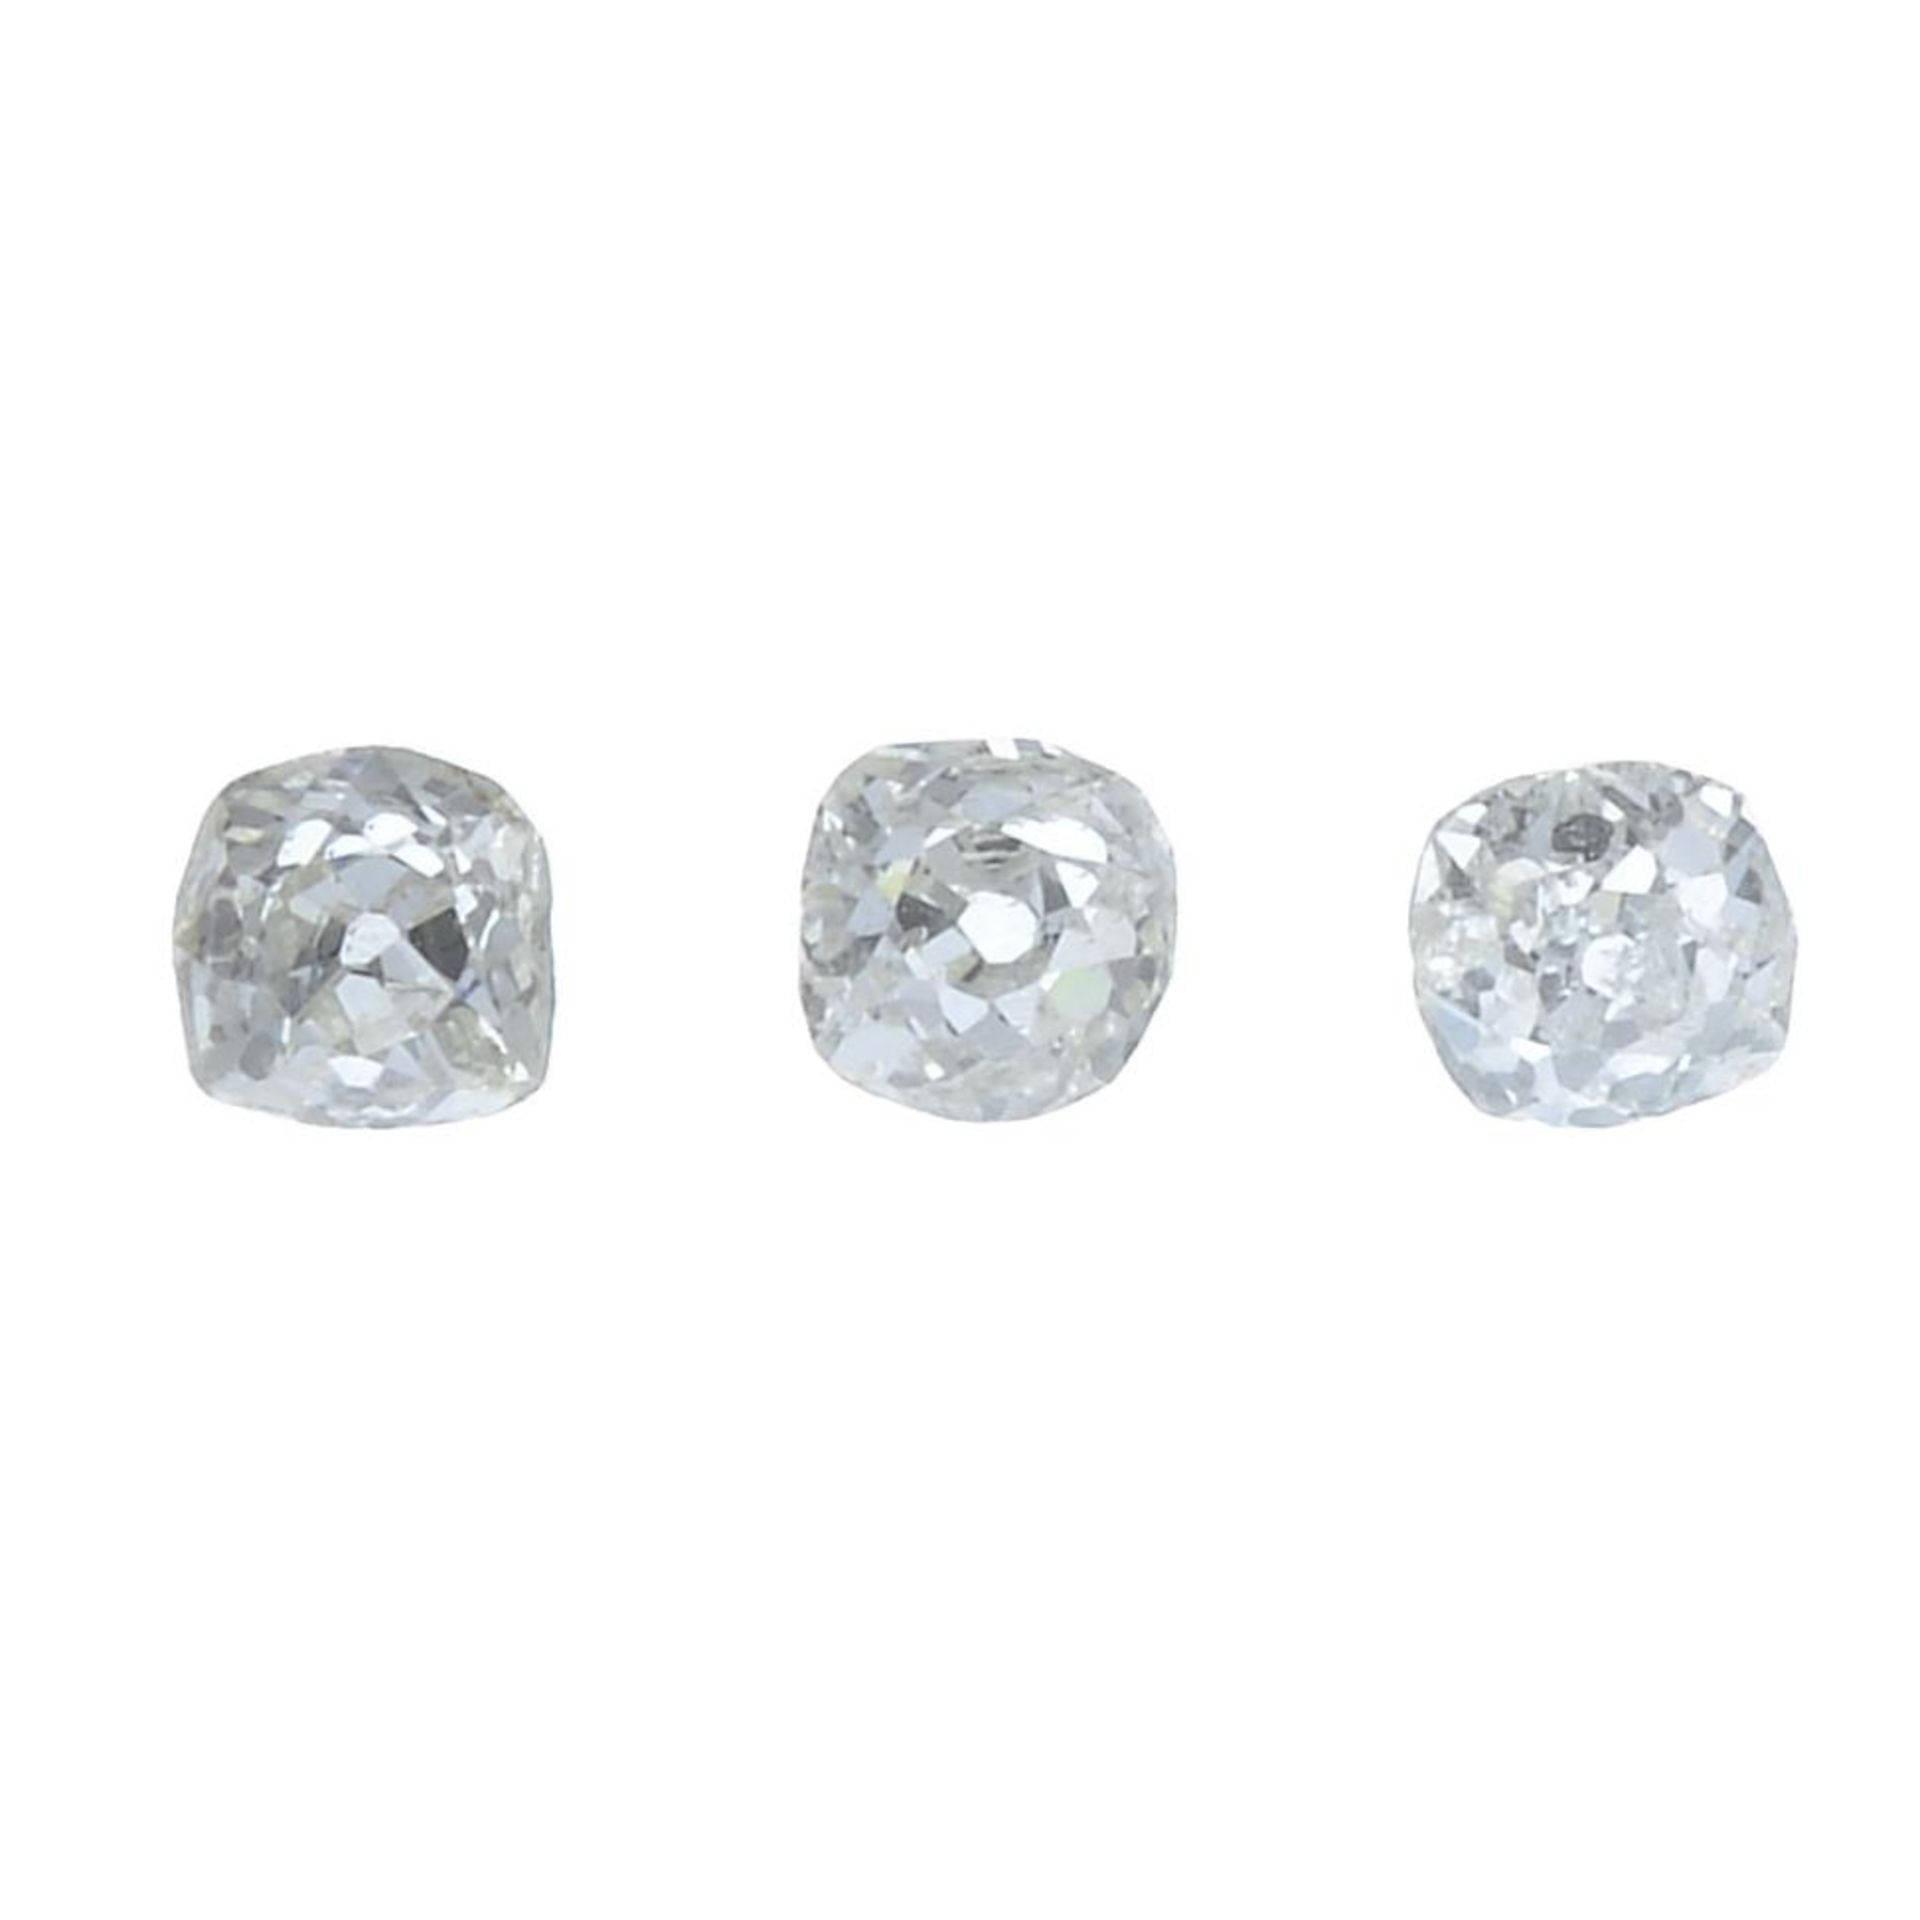 Three old-cut diamonds.